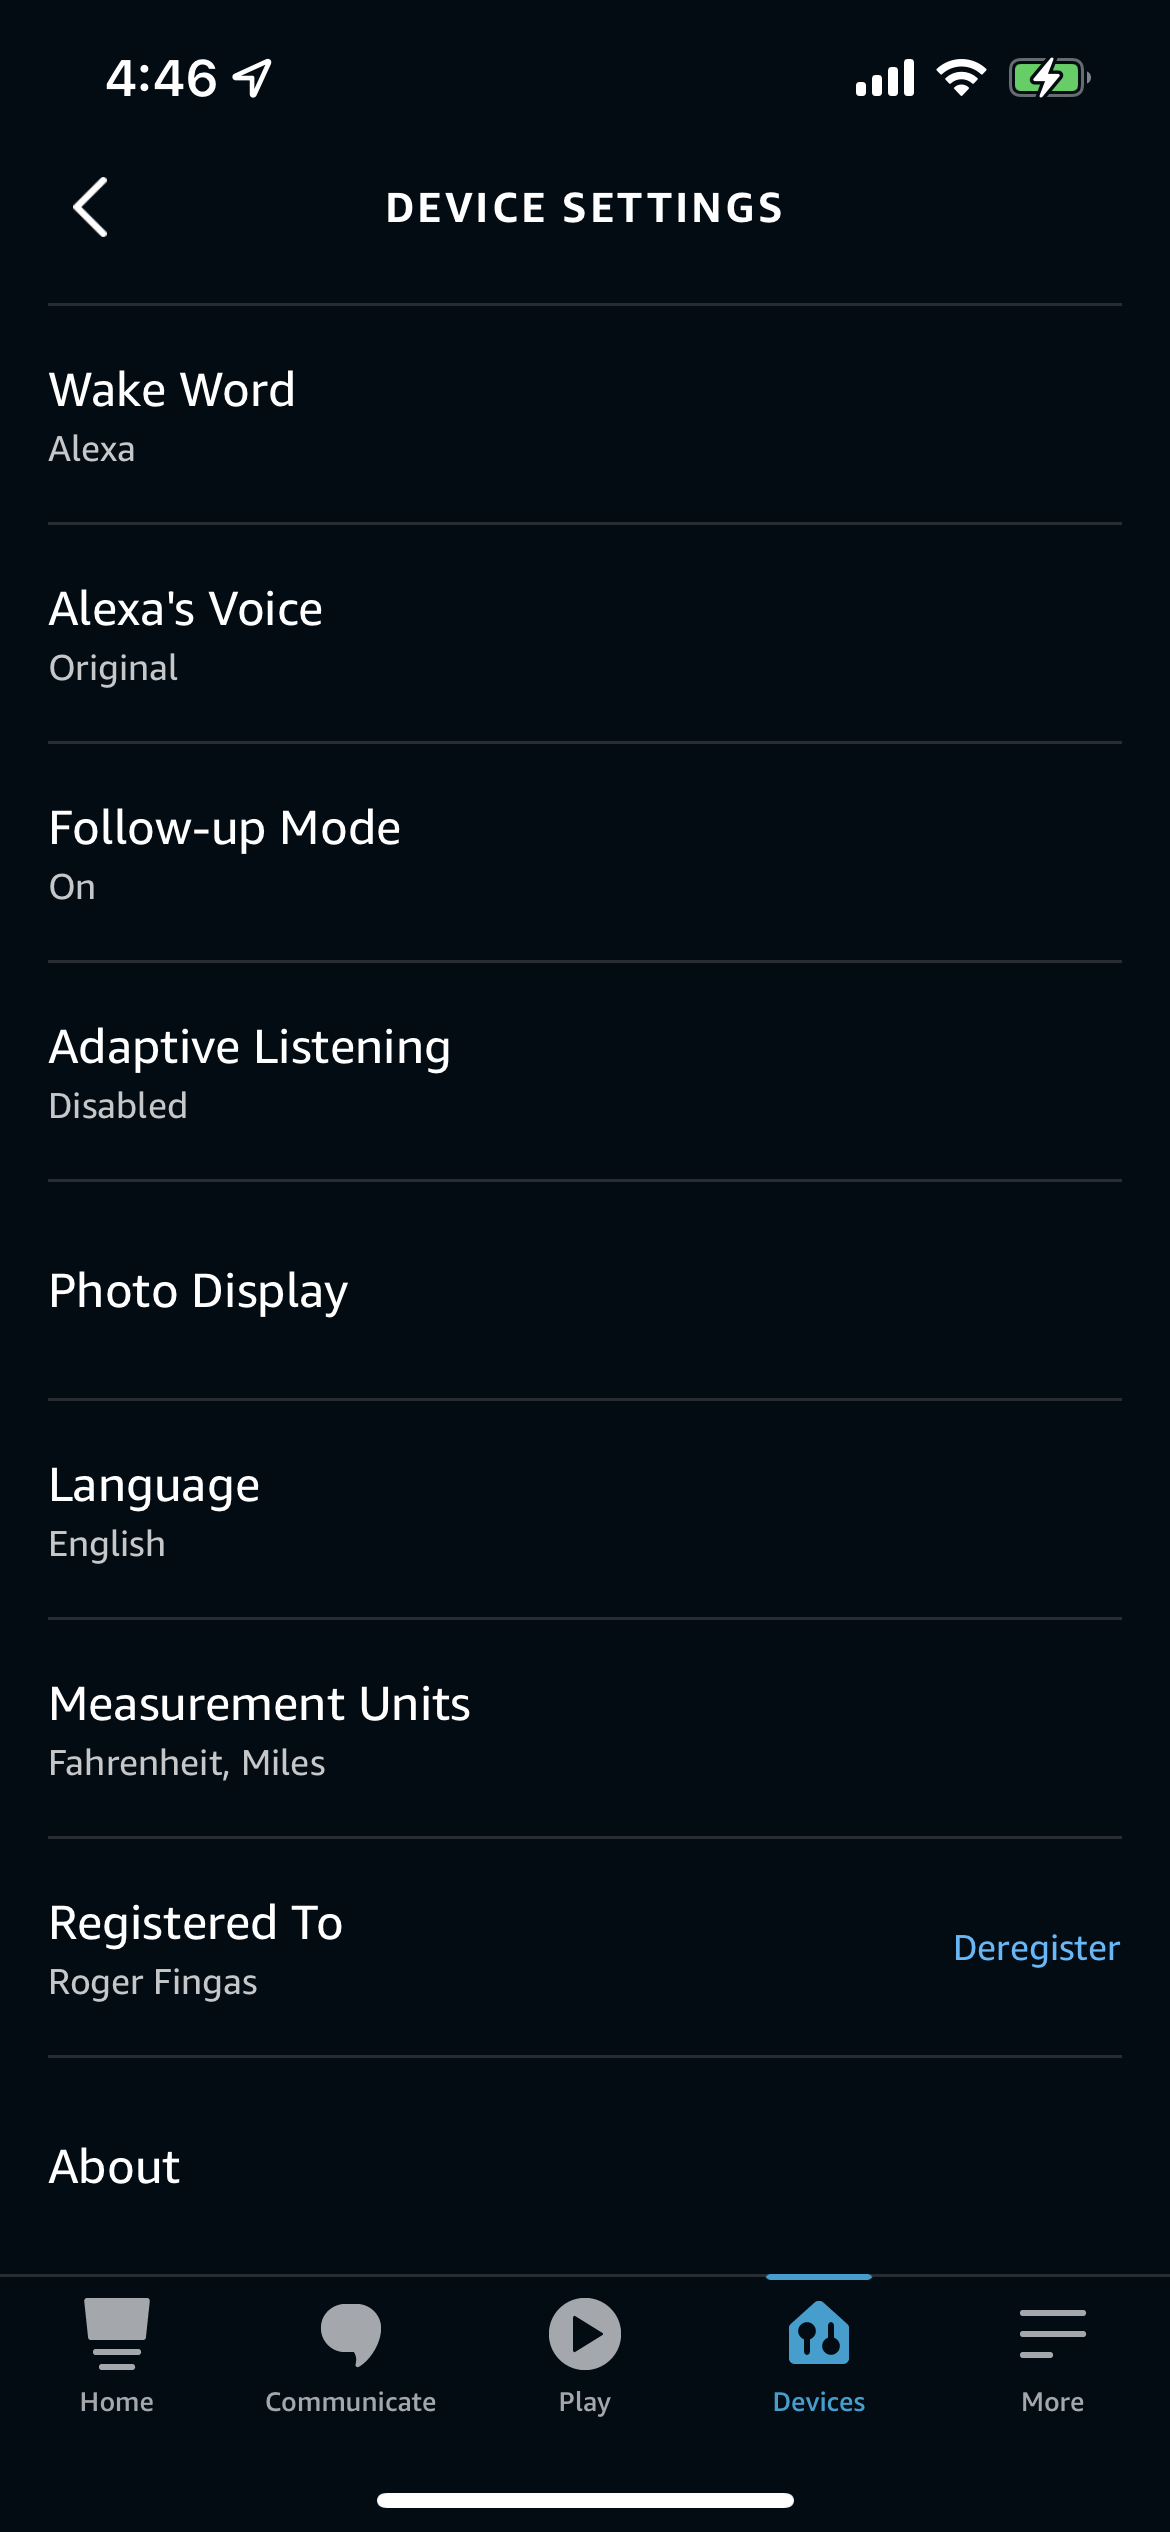 Echo Show device settings in the Alexa app